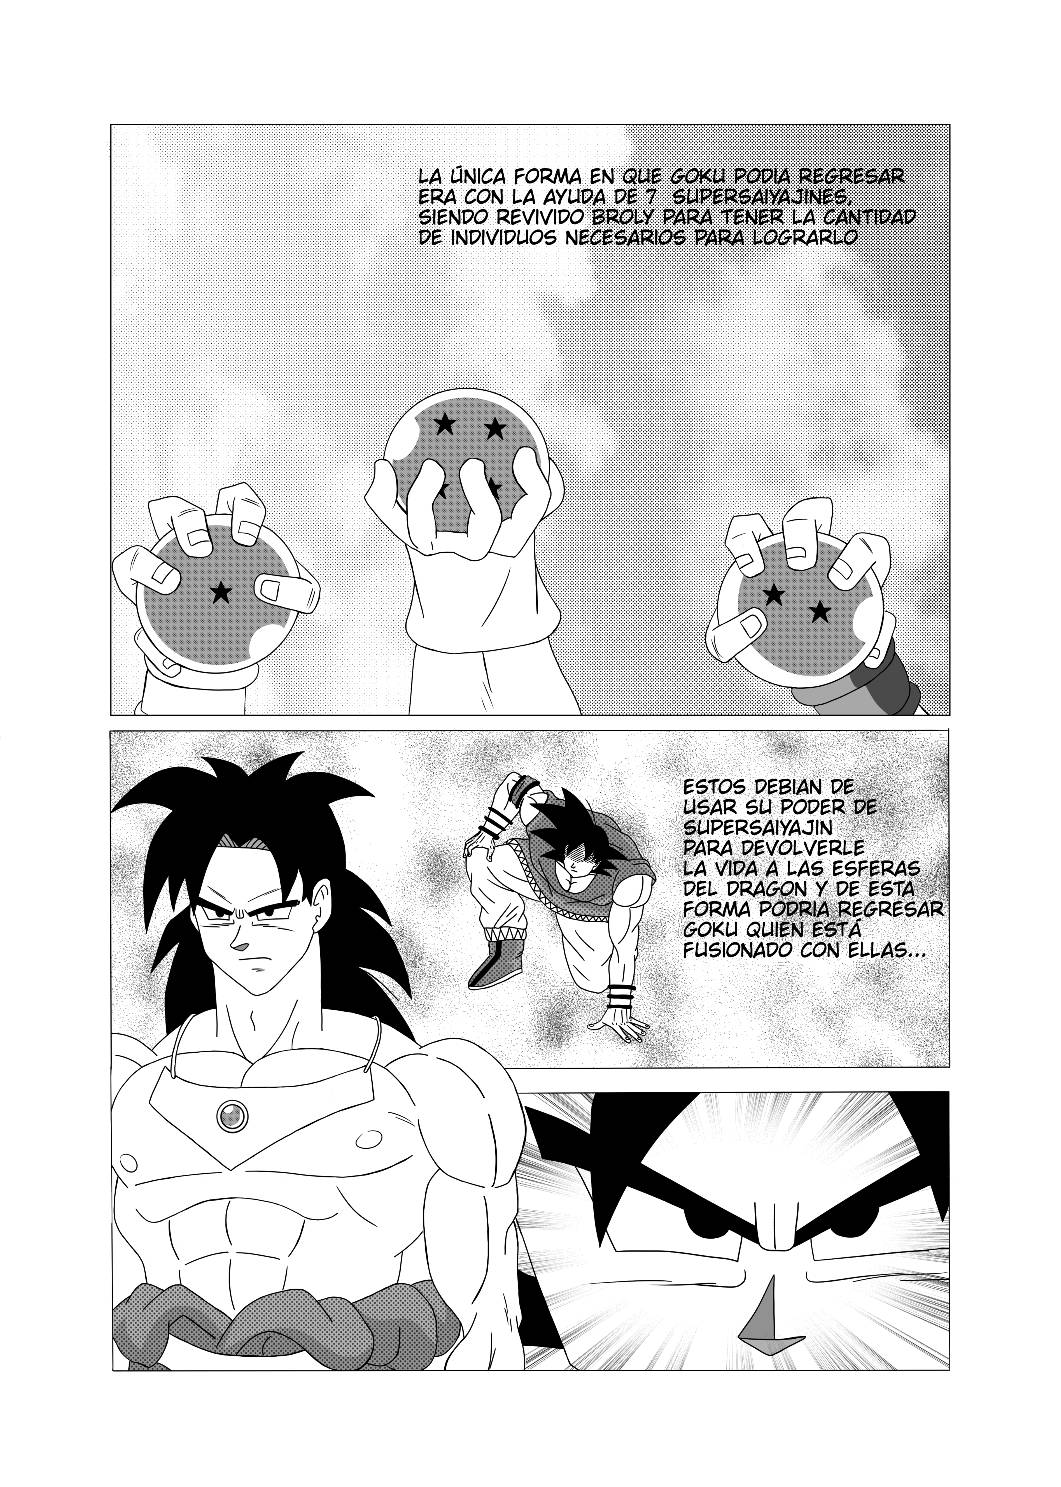 hoja manga dragon ball af by PapeluchoAS on DeviantArt